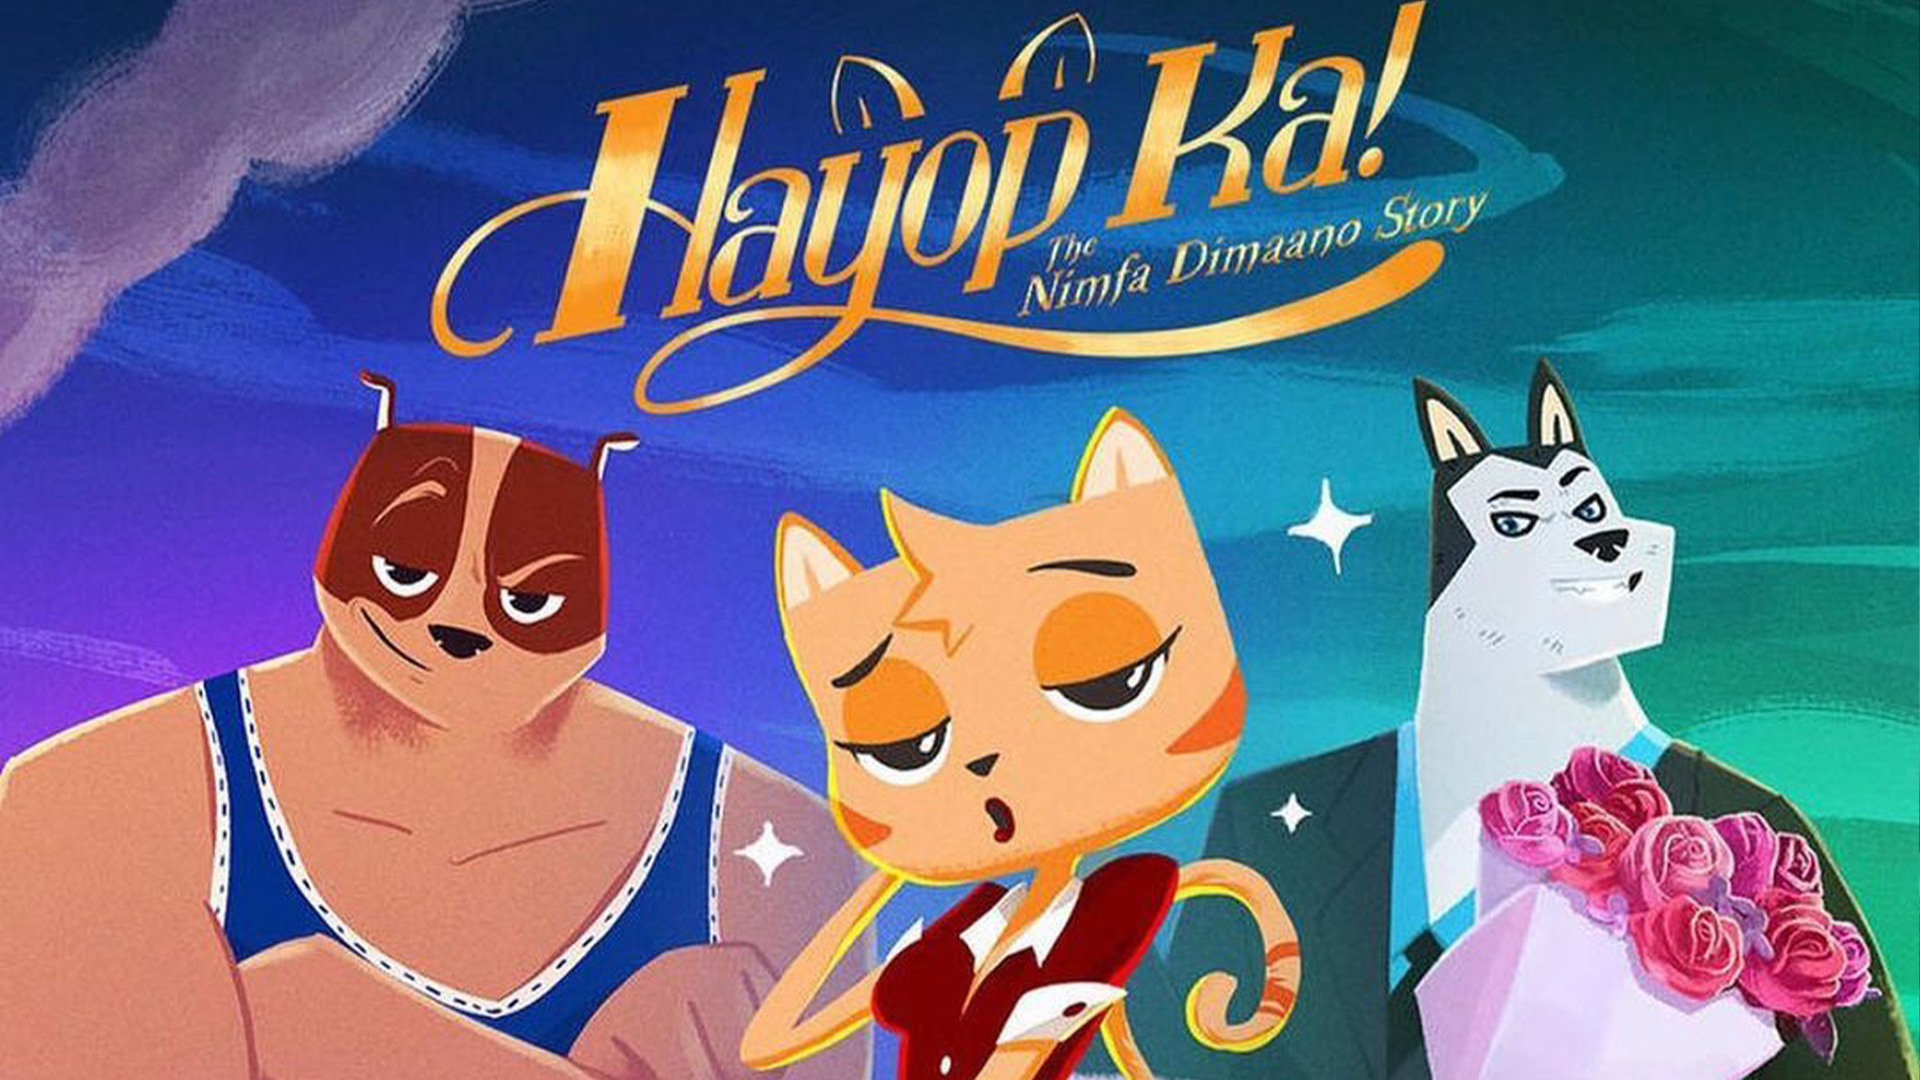 Inside Filipino Animated Movie Hayop Ka The Nimfa Dimaano Story